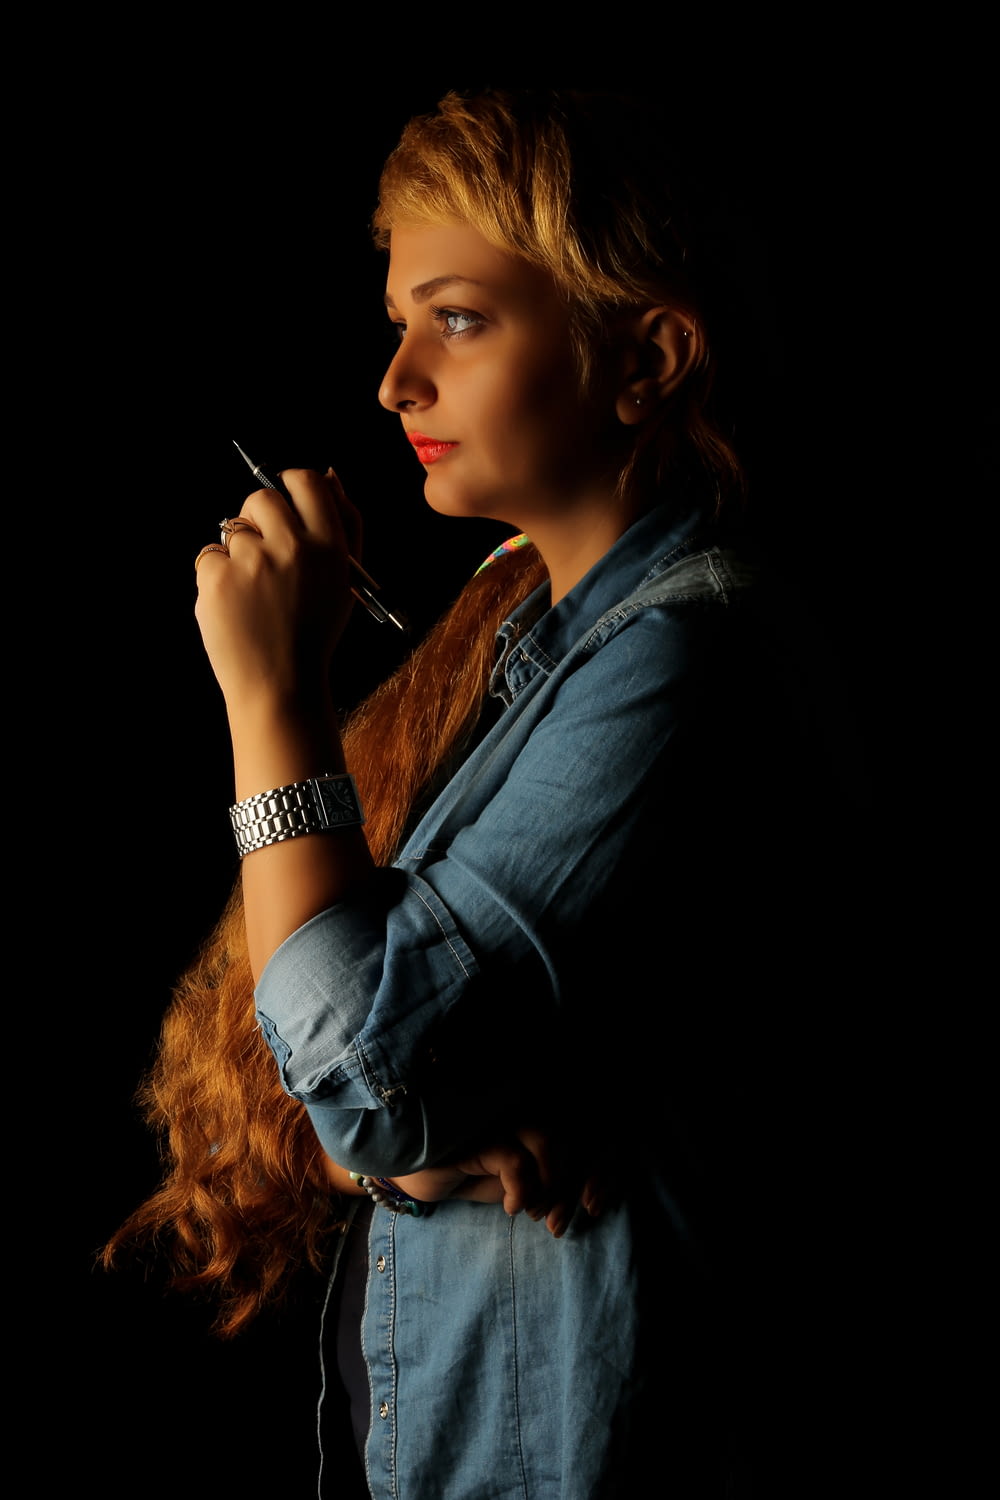 Frau in schwarzem Langarmhemd raucht Zigarette